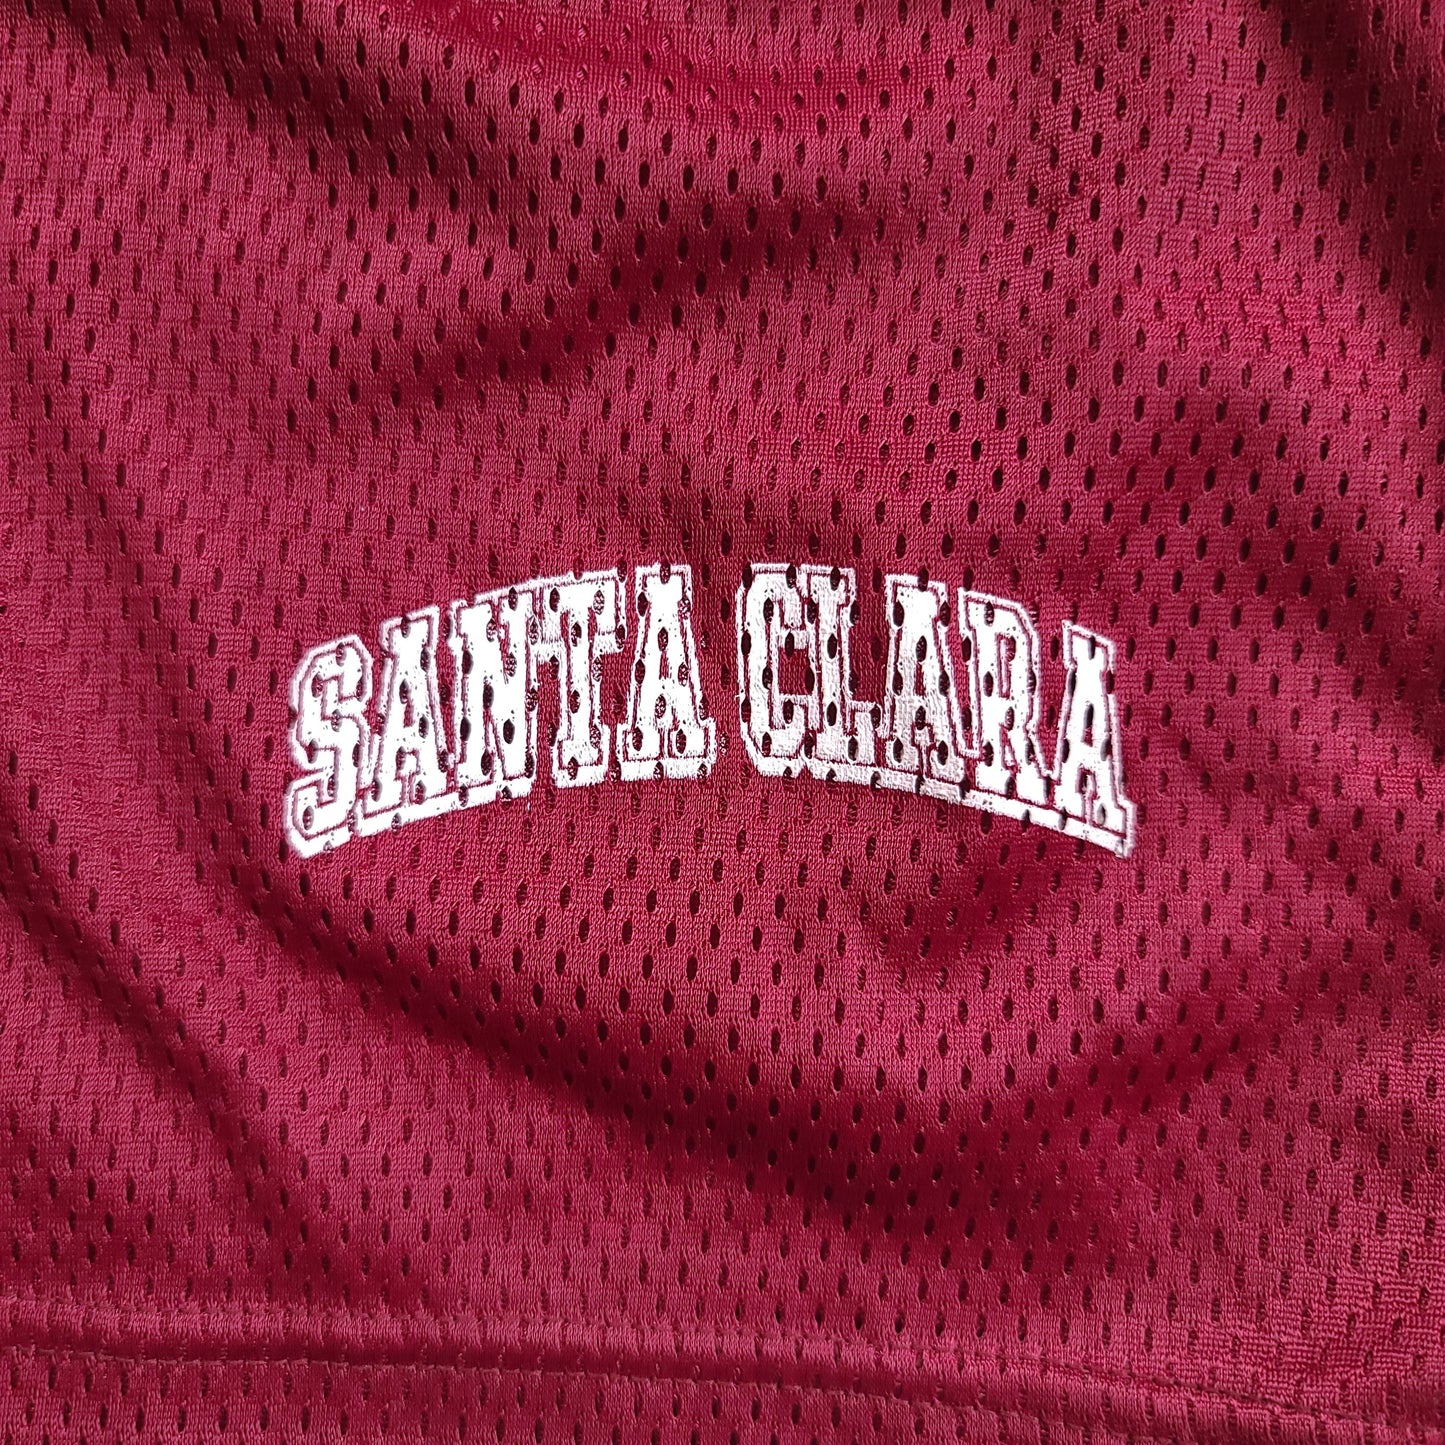 Vintage Santa Cruz Maroon Mesh Athletic Shorts